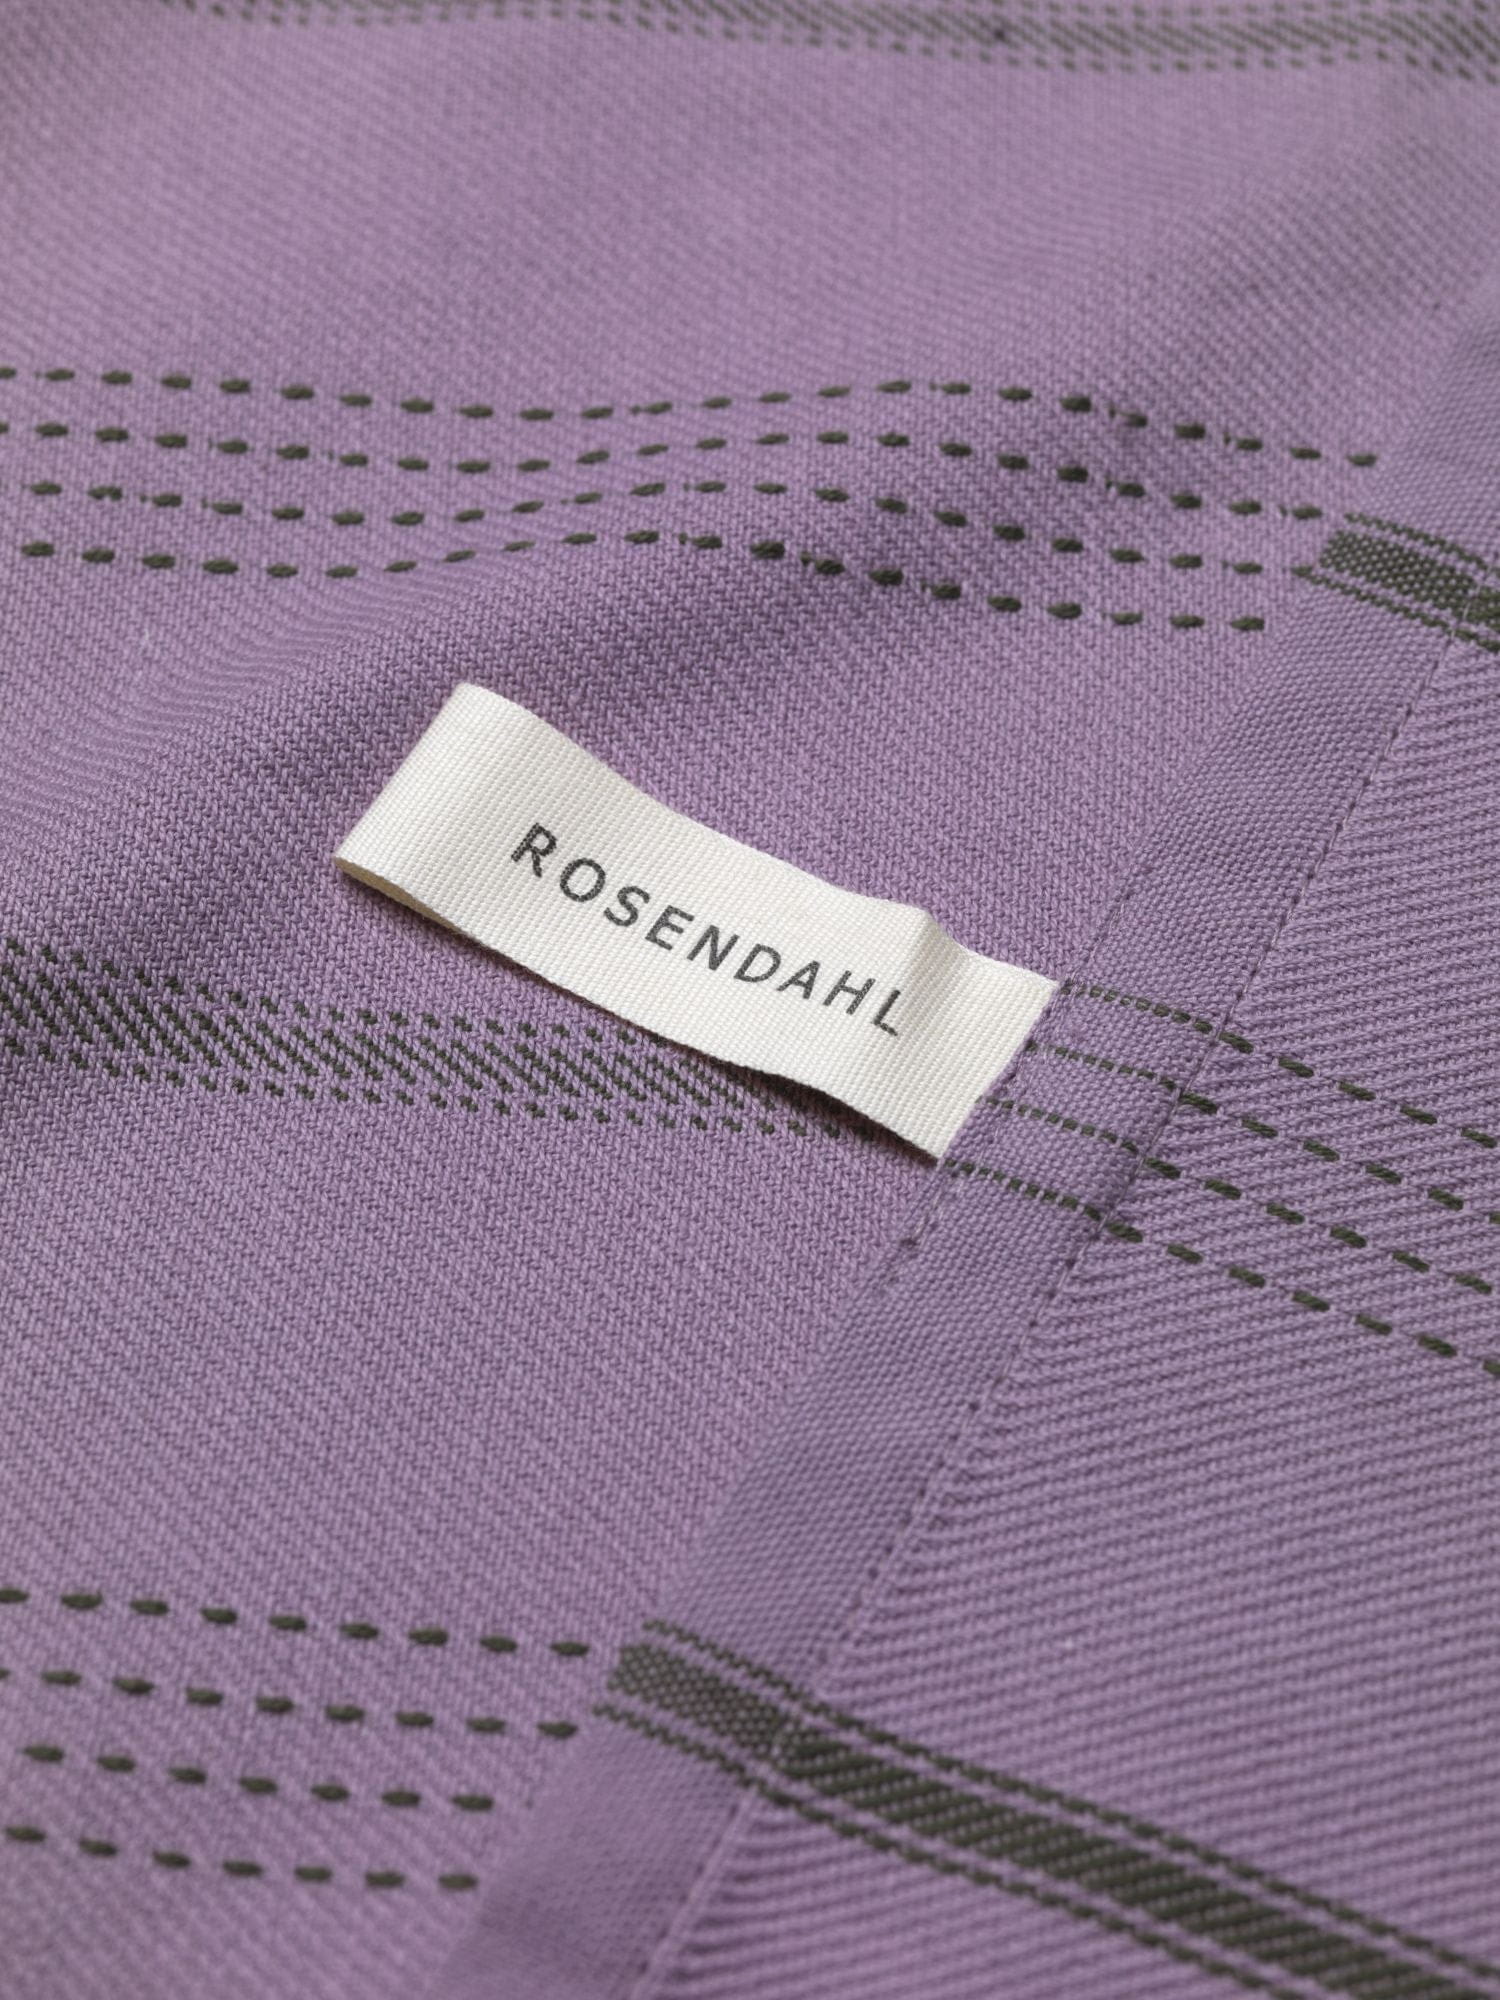 Rosendahl Rosendahl Textiles Beta Tea Torlel 50x70 cm, violet